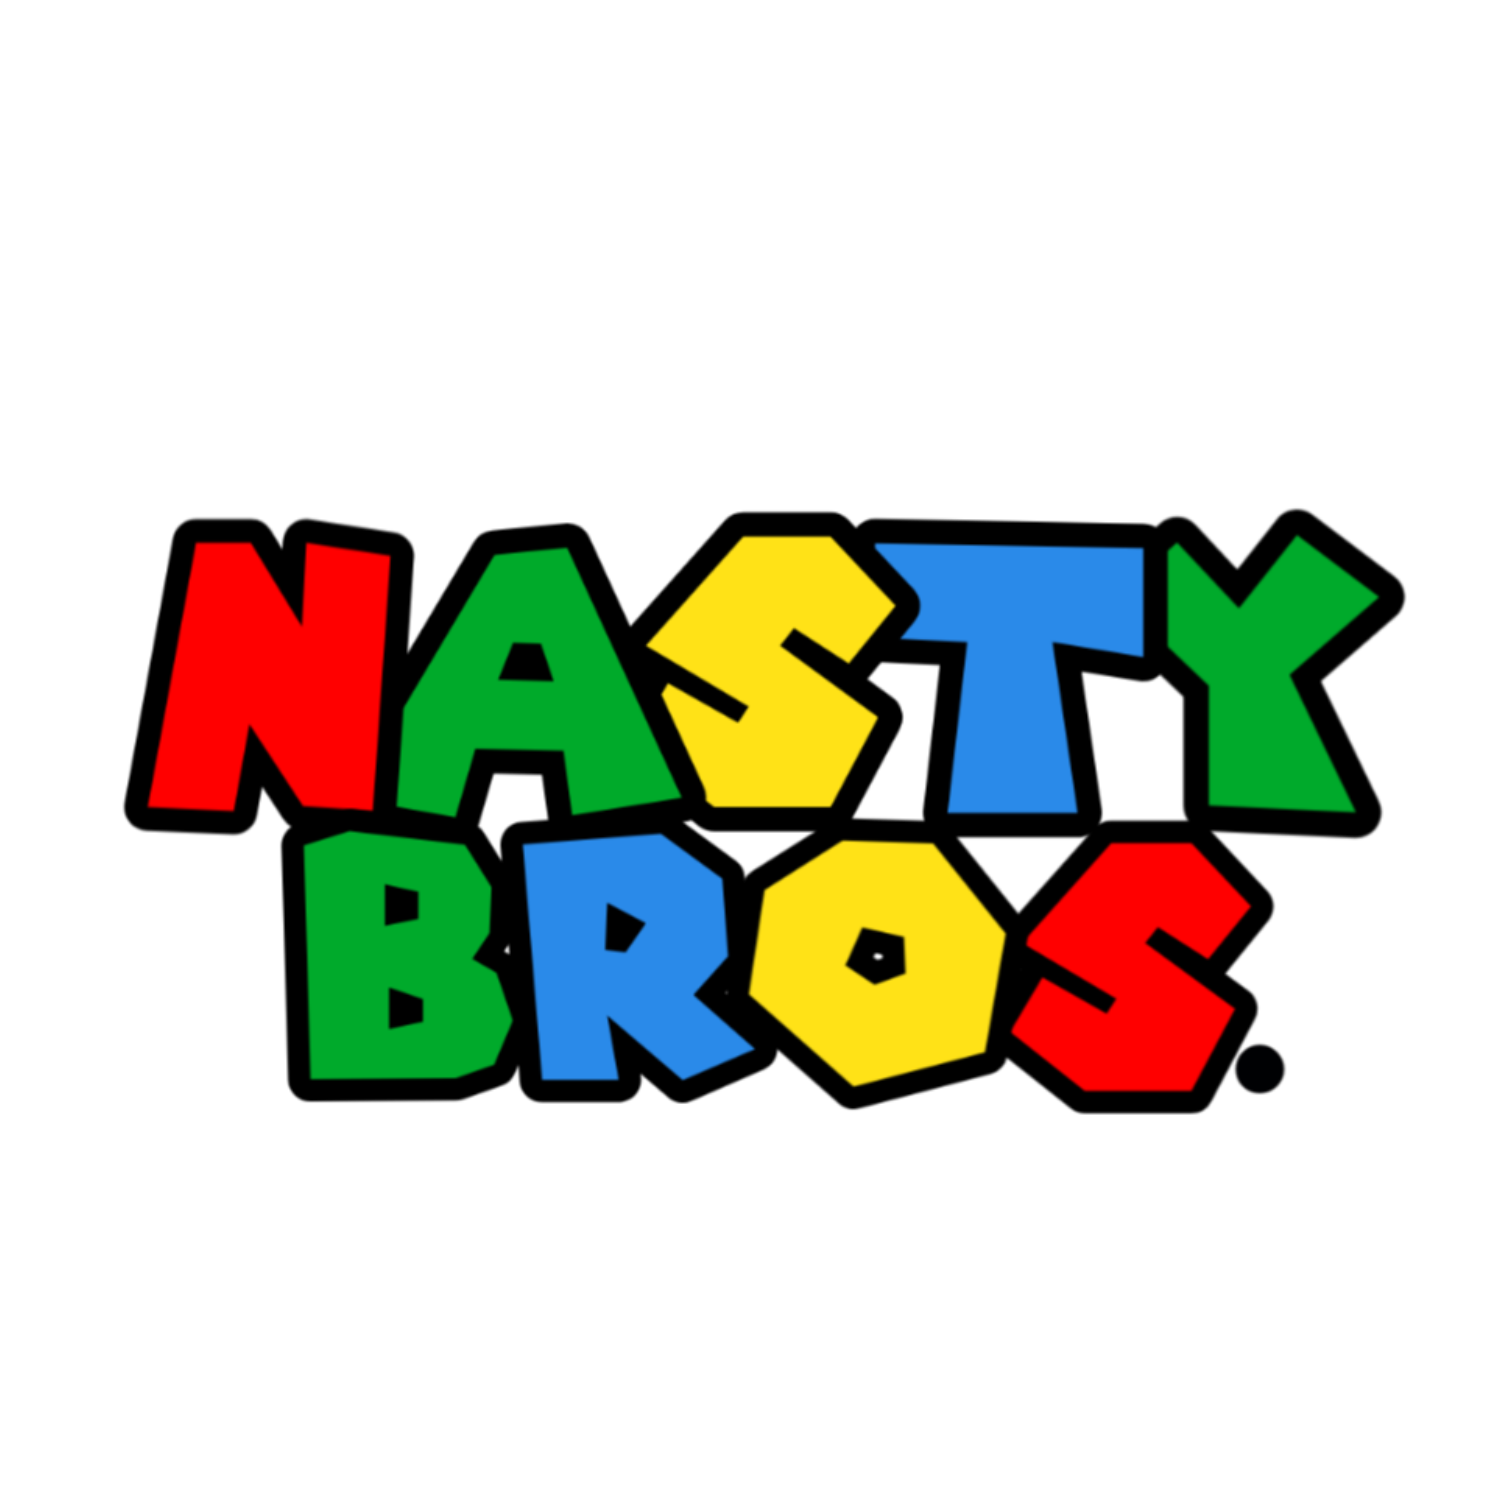 THE NASTY BROS